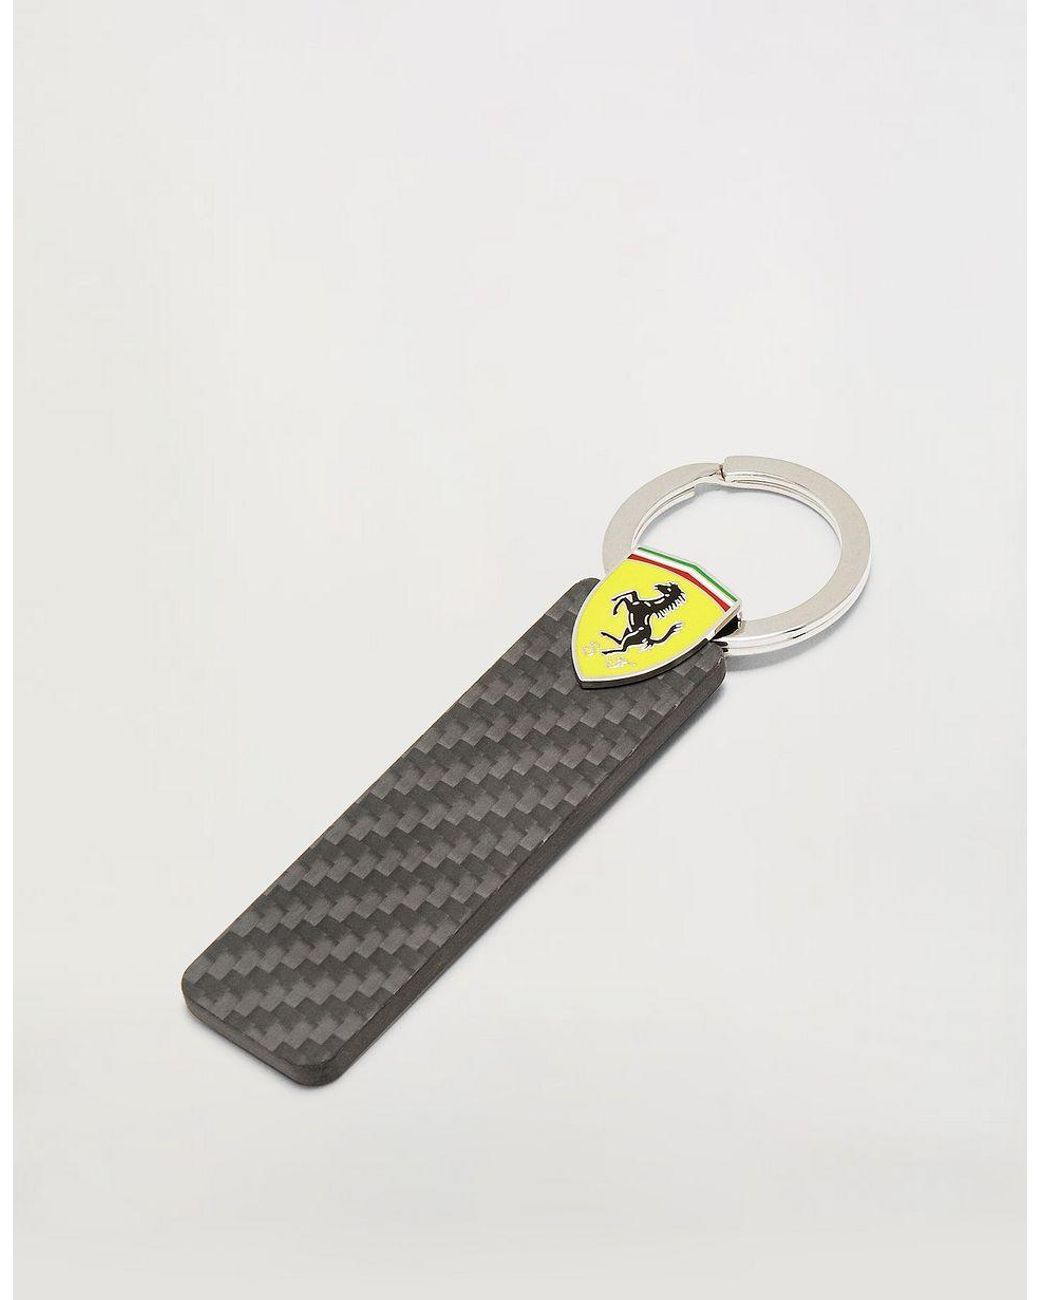  Porte-clés Ferrari Scudetto avec armoiries aspect carbone